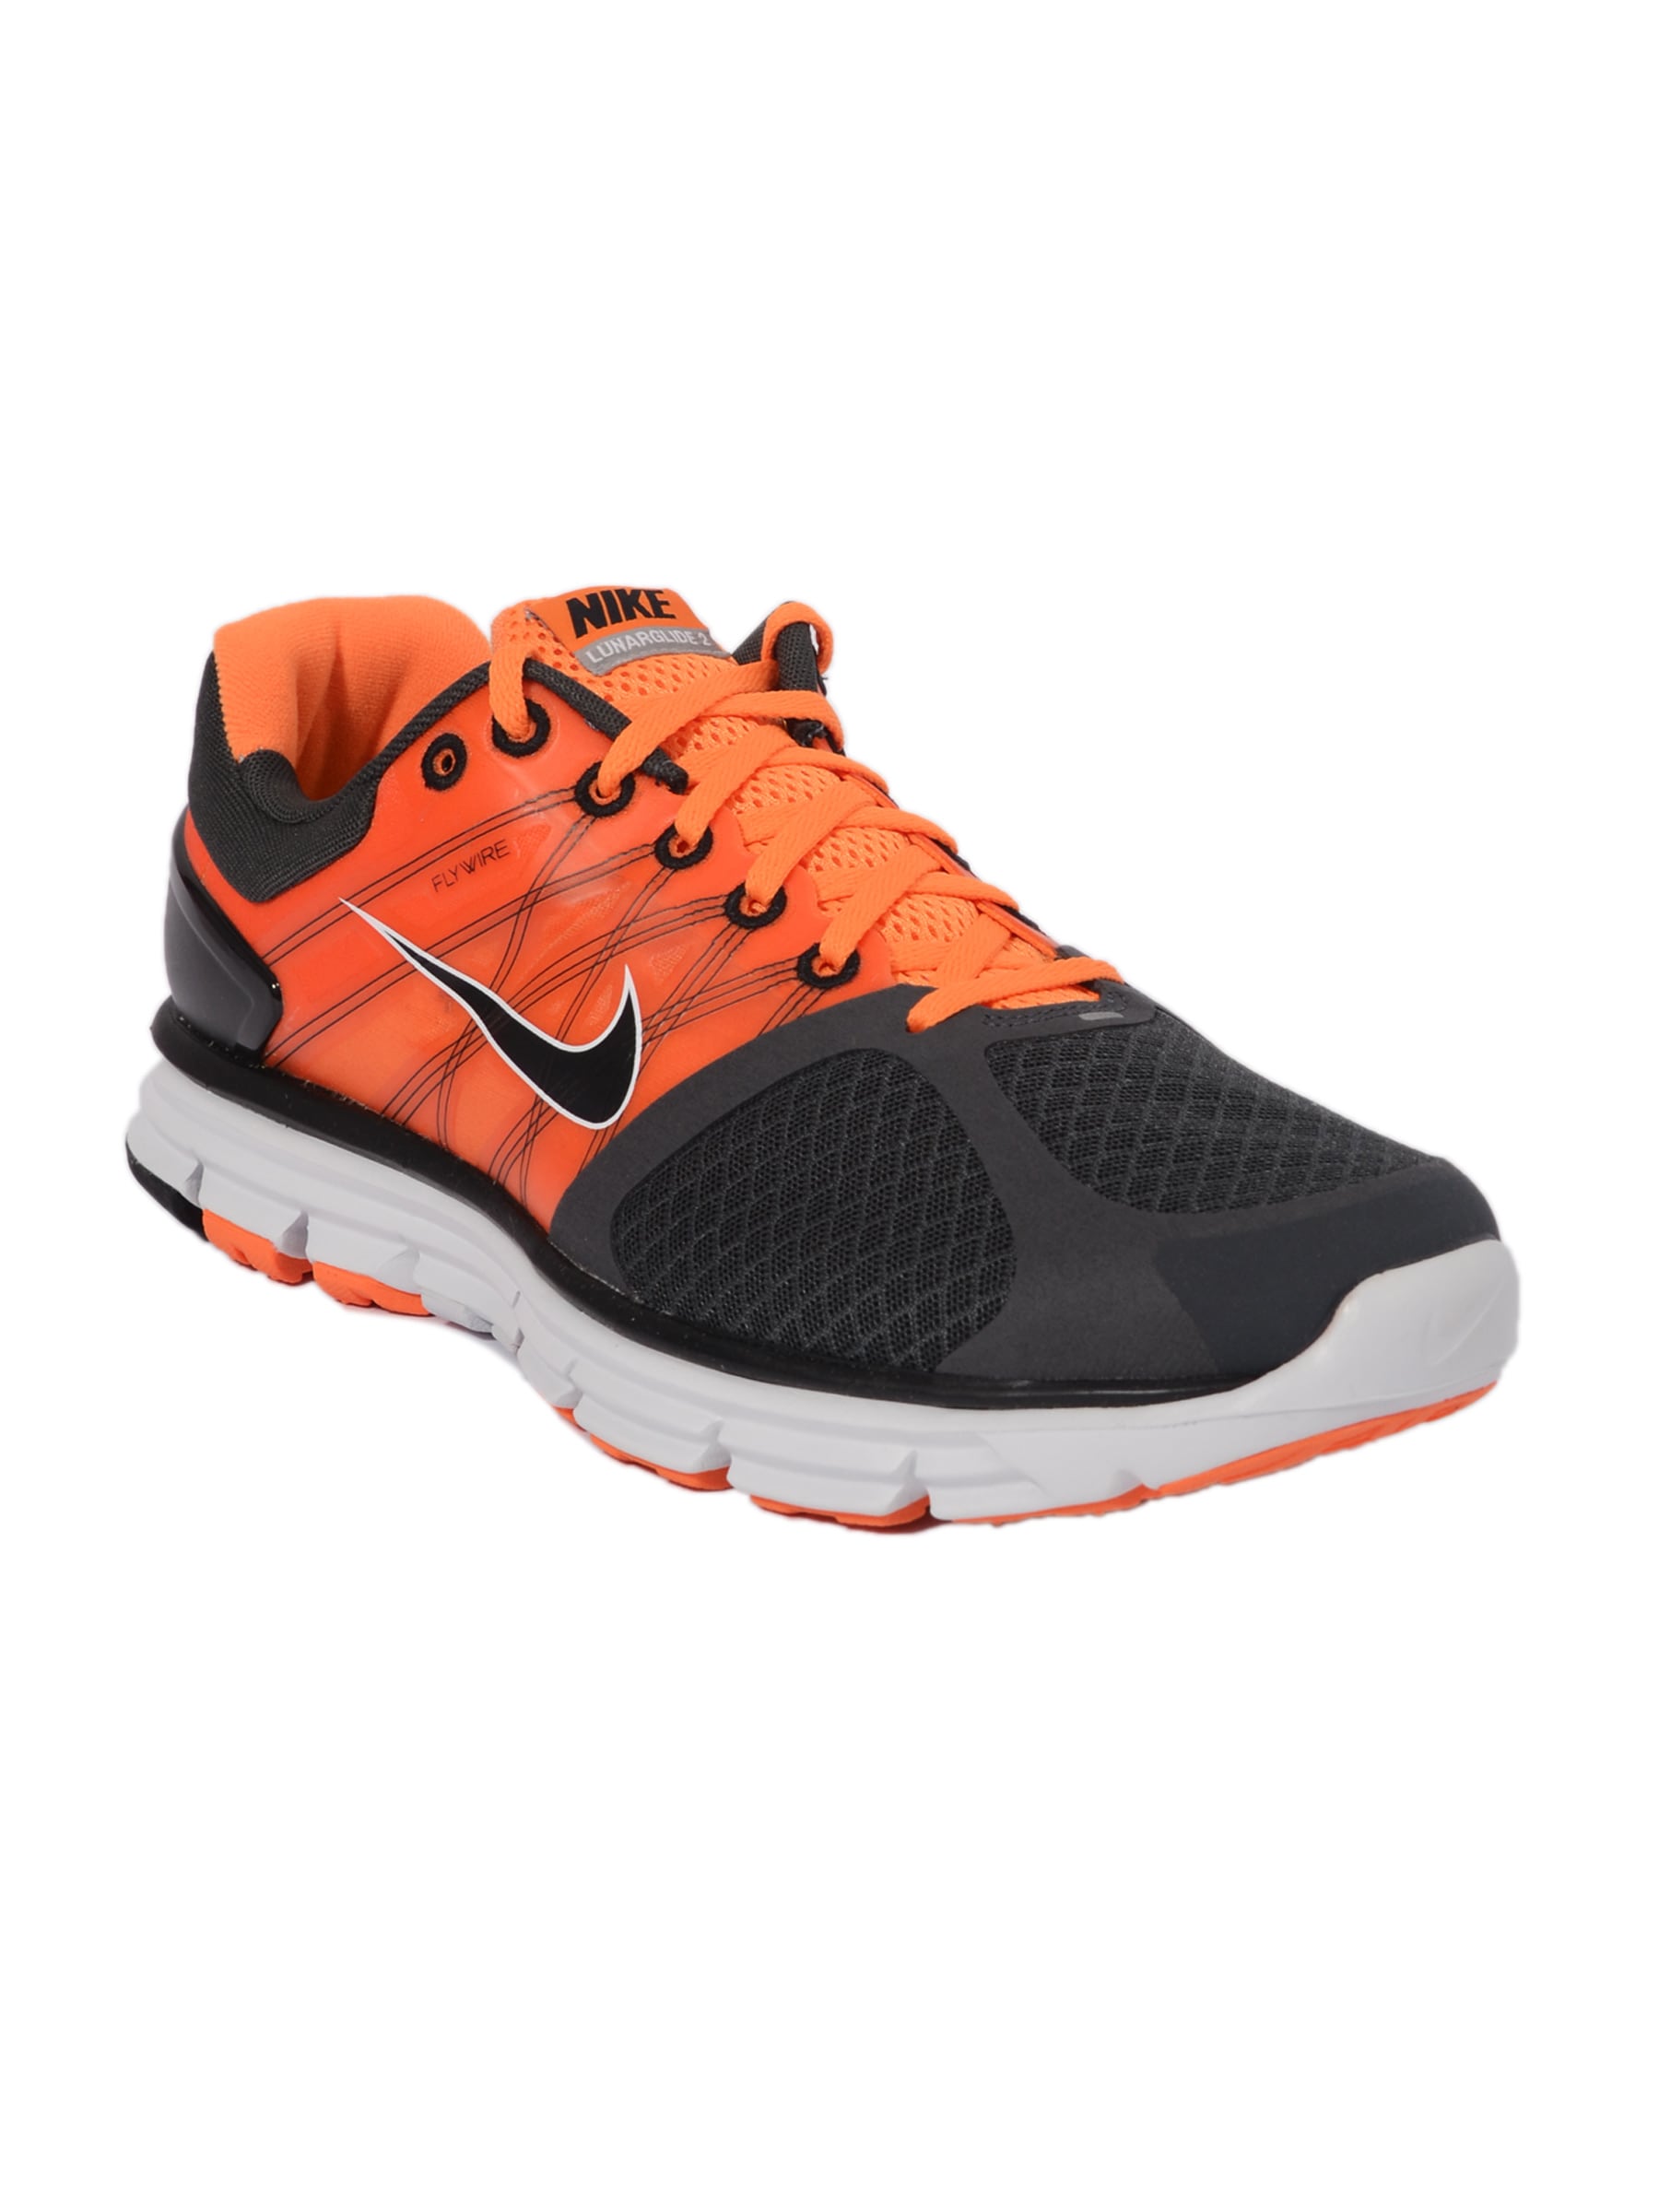 Nike Men's Lunarglide +2 Black Orange Shoe